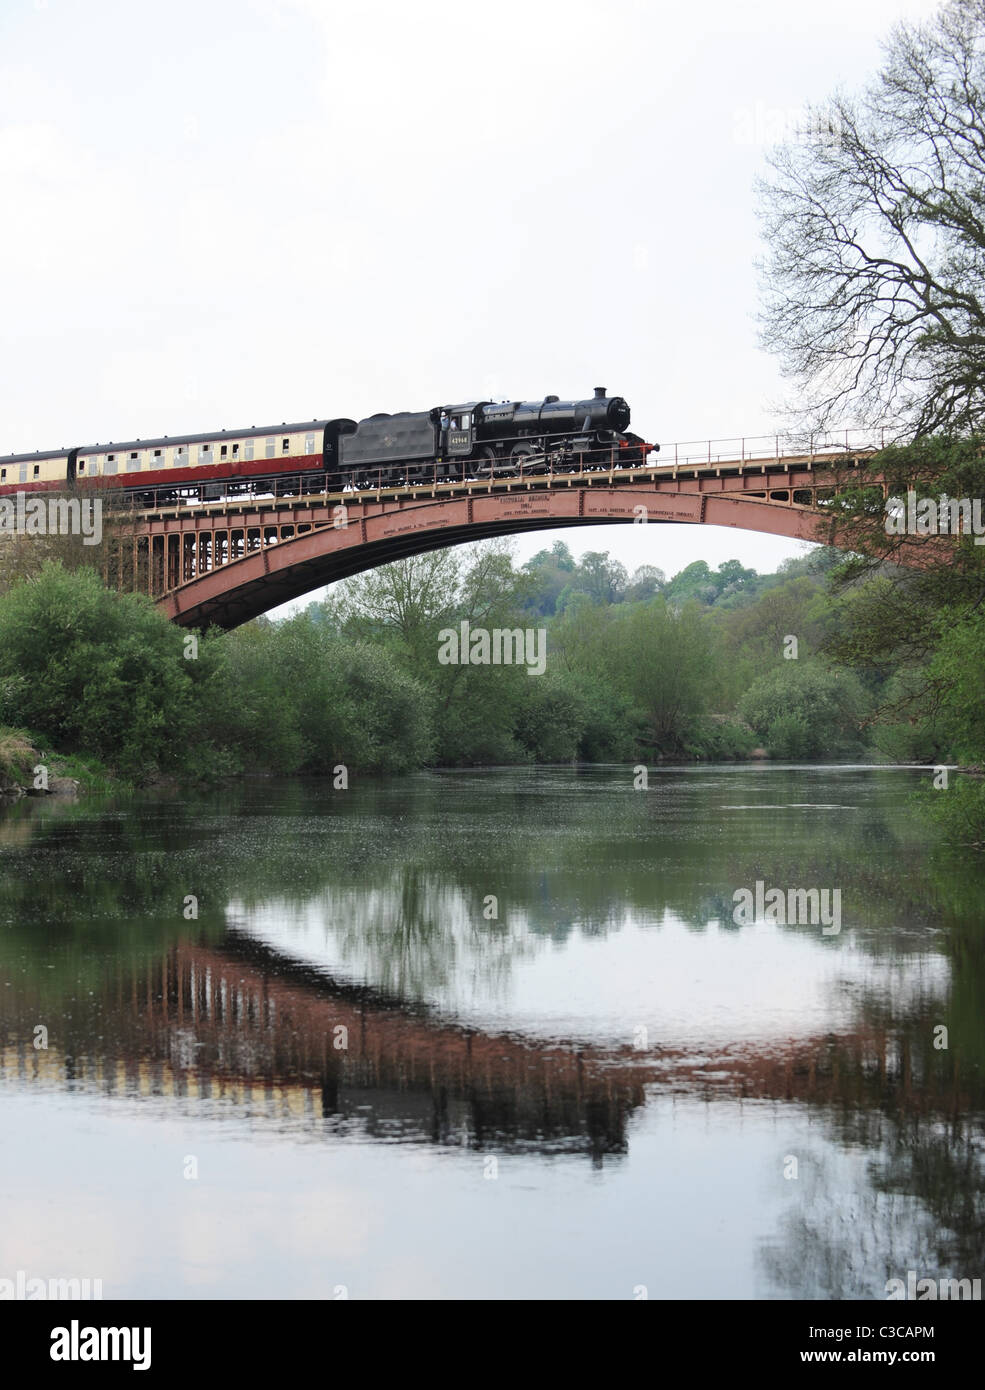 Steam Locomotive crossing Severn Valley Railway Victoria Bridge Arley in Worcestershire England Uk Stock Photo